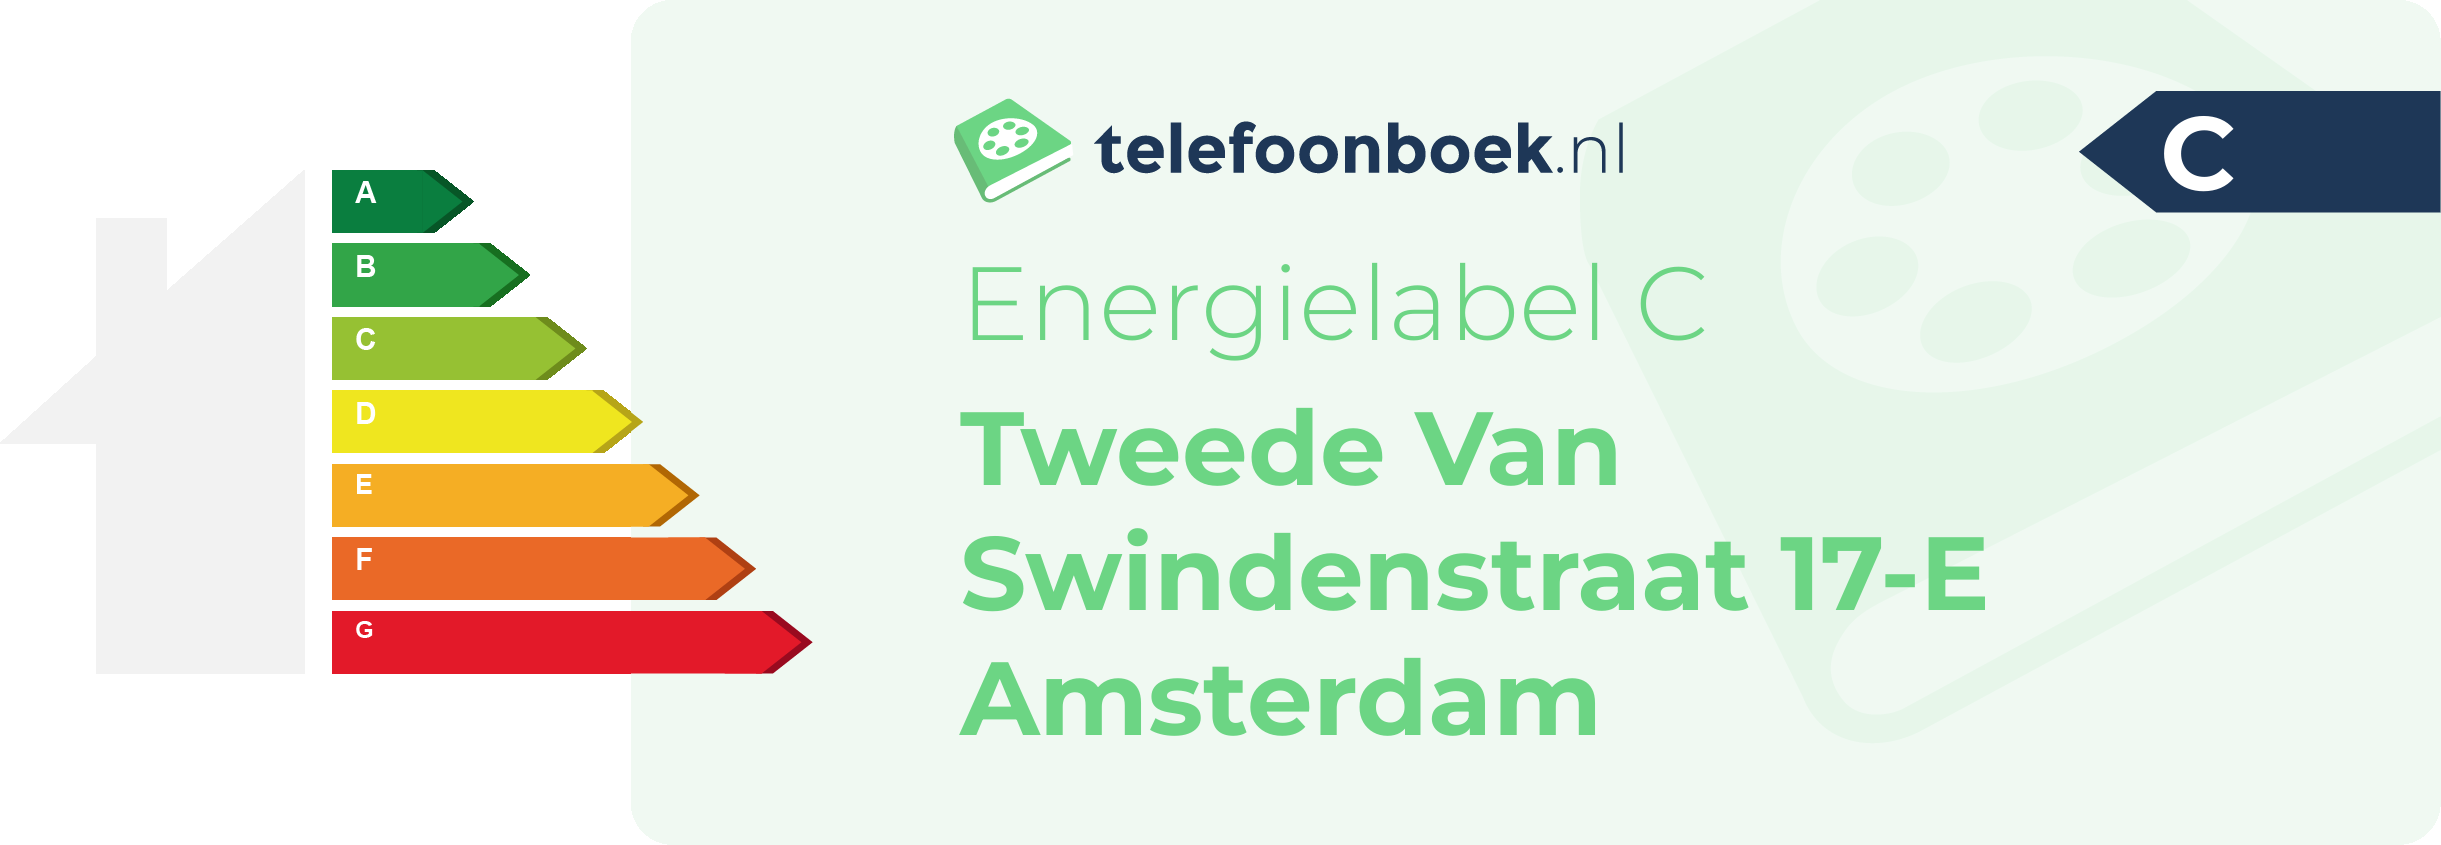 Energielabel Tweede Van Swindenstraat 17-E Amsterdam